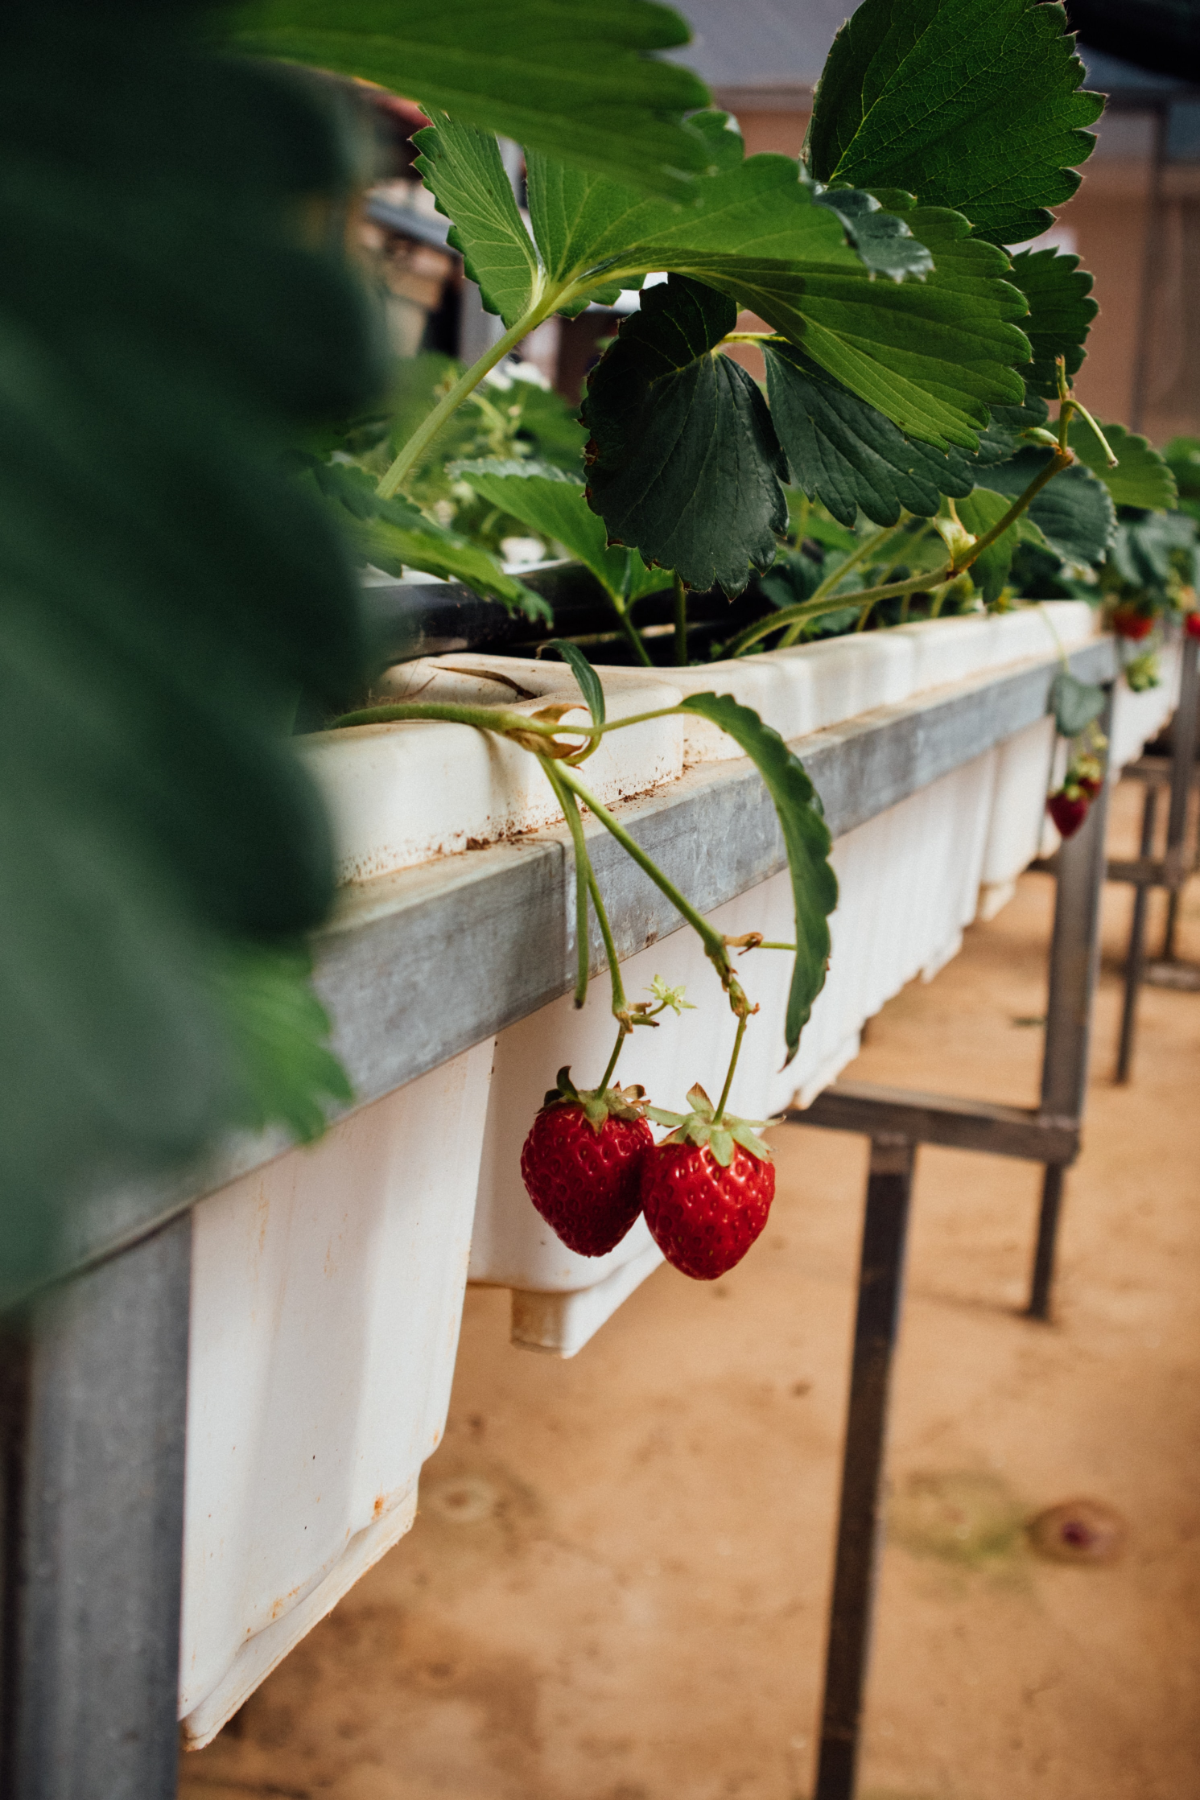 erdbeeren richtig anbauen im kuebel oder topf so geht es